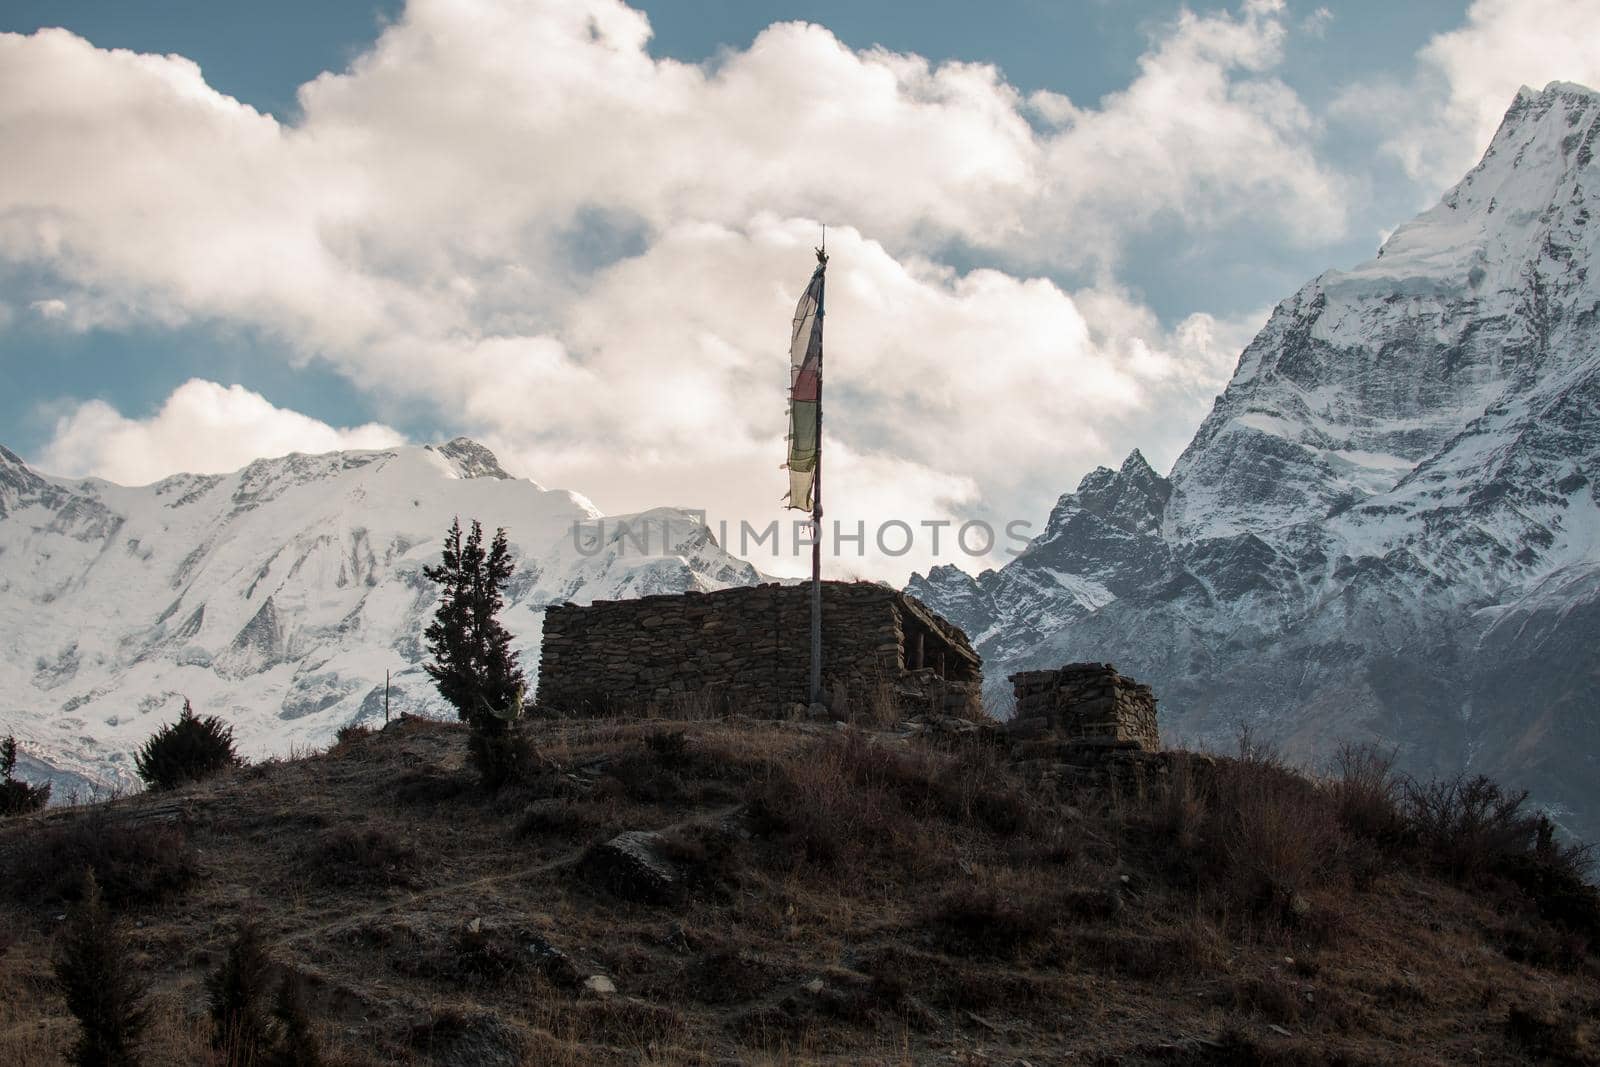 Buddhist stone building with prayer flags over Manang mountain village, trekking Annapurna circuit, Nepal